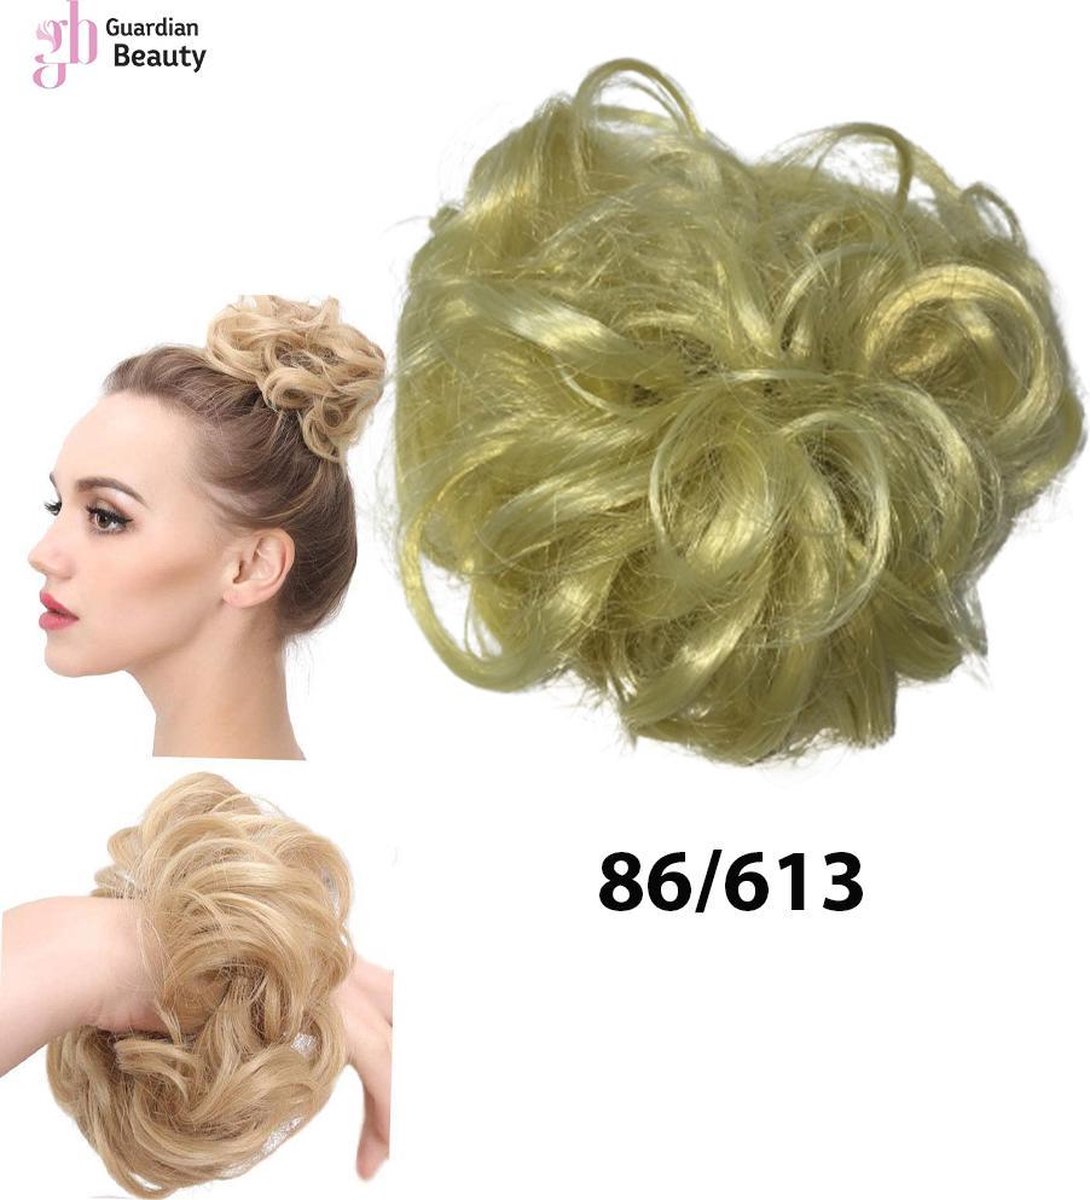 Messy Haarstuk Bun 86/613 | Haar wrap extension | Haarstuk Clip-In Twist Bun | Hair Bun | Haarstuk Hair Extensions Donut Ponytail Messy Bun - 40 Gram